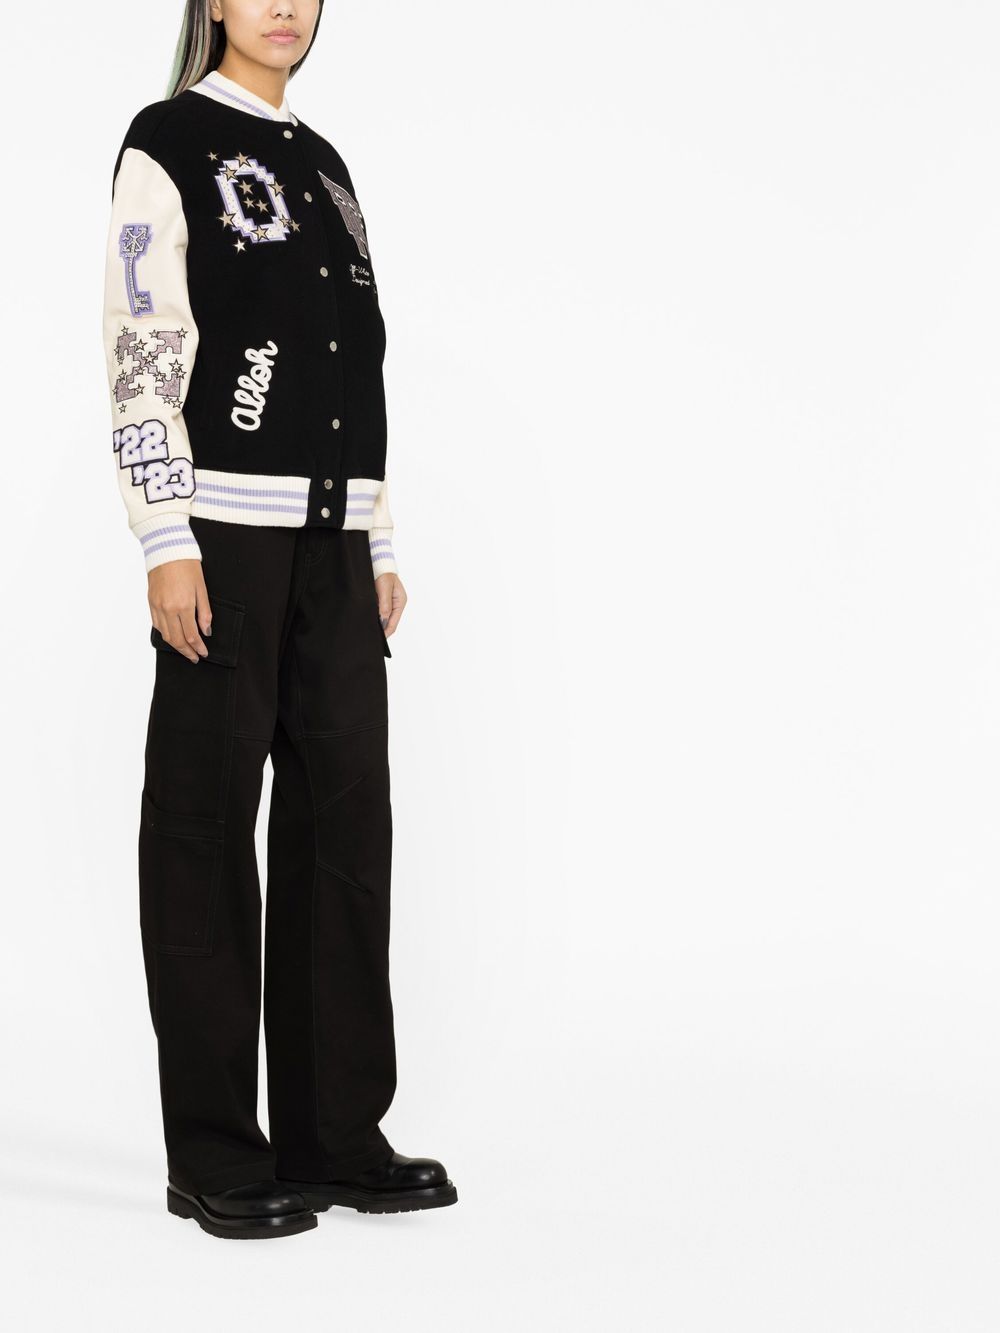 NWT OFF-WHITE C/O VIRGIL ABLOH Black Intarsia Varsity Jacket Size M $1535